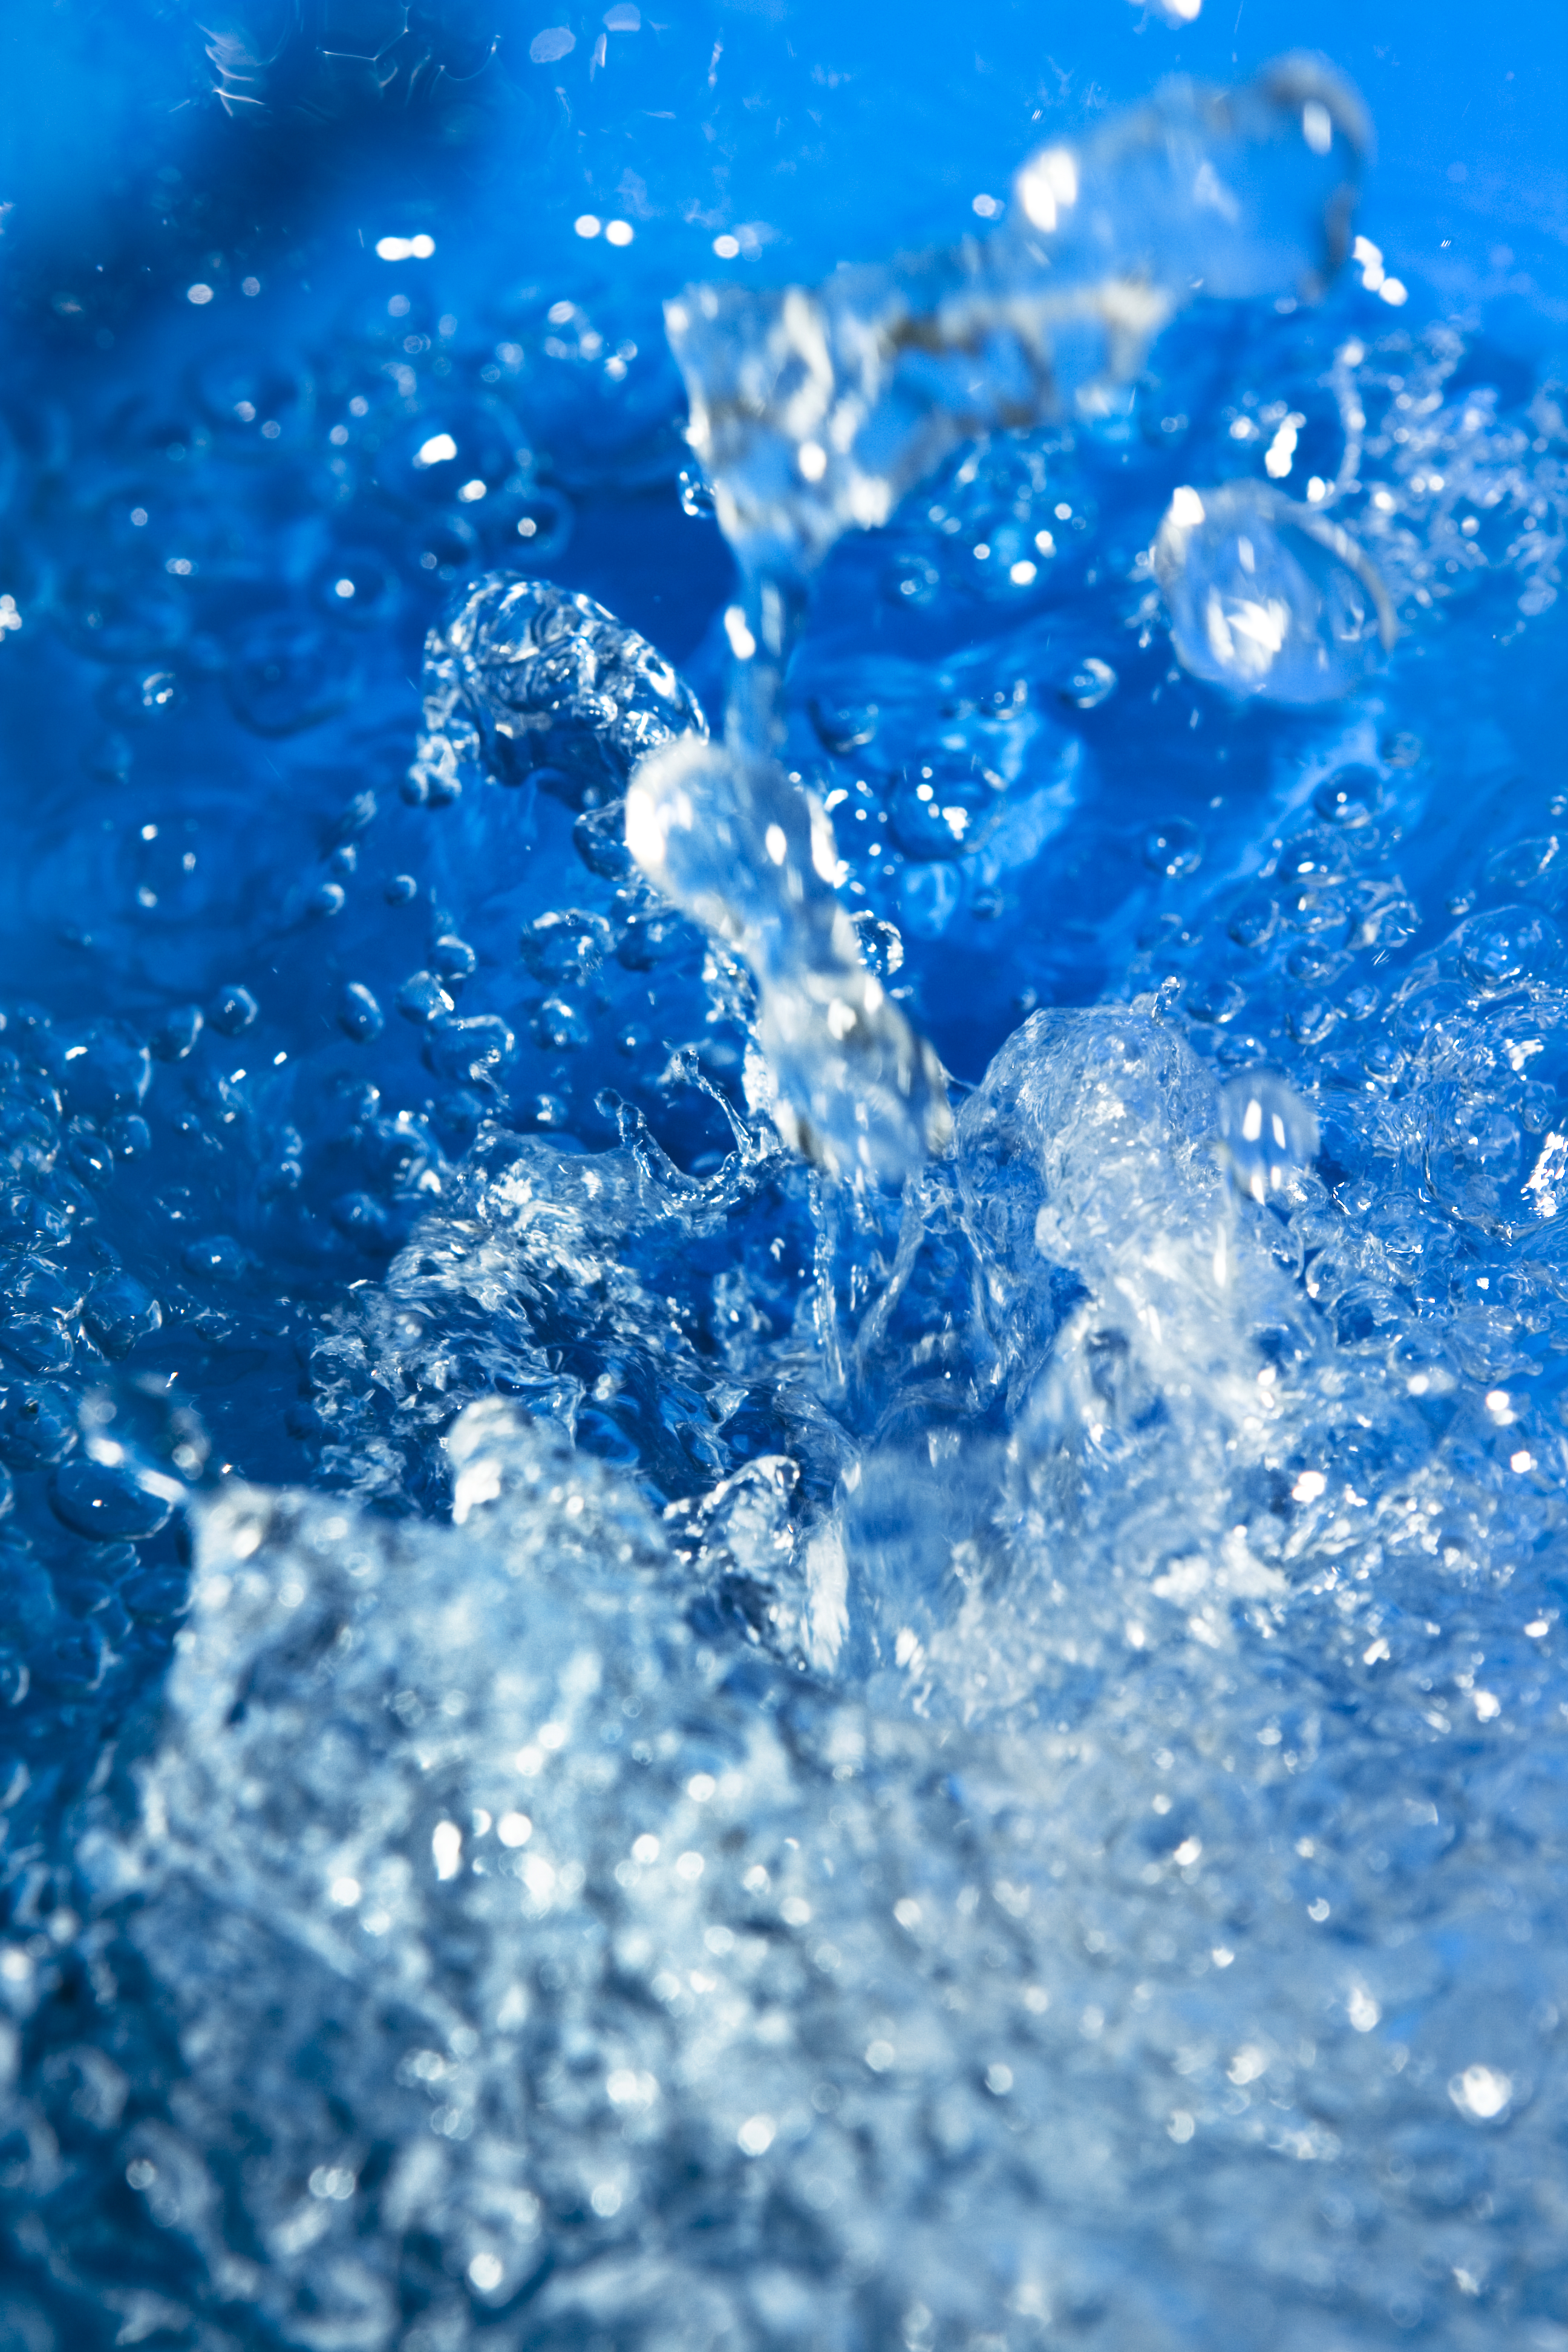 drops, spray, splash, macro, water, close up Image for desktop